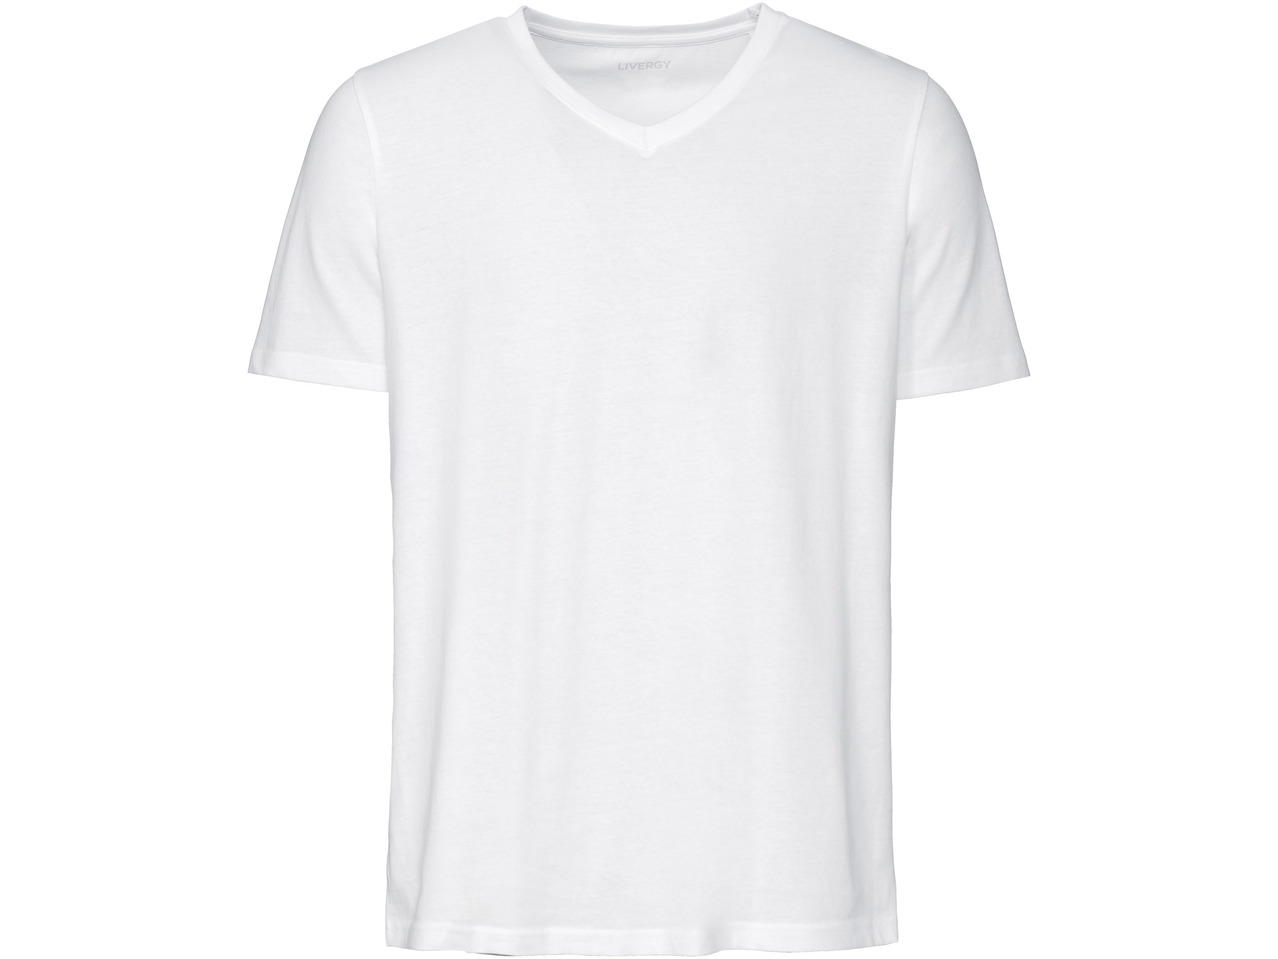 LIVERGY Men's T-Shirts